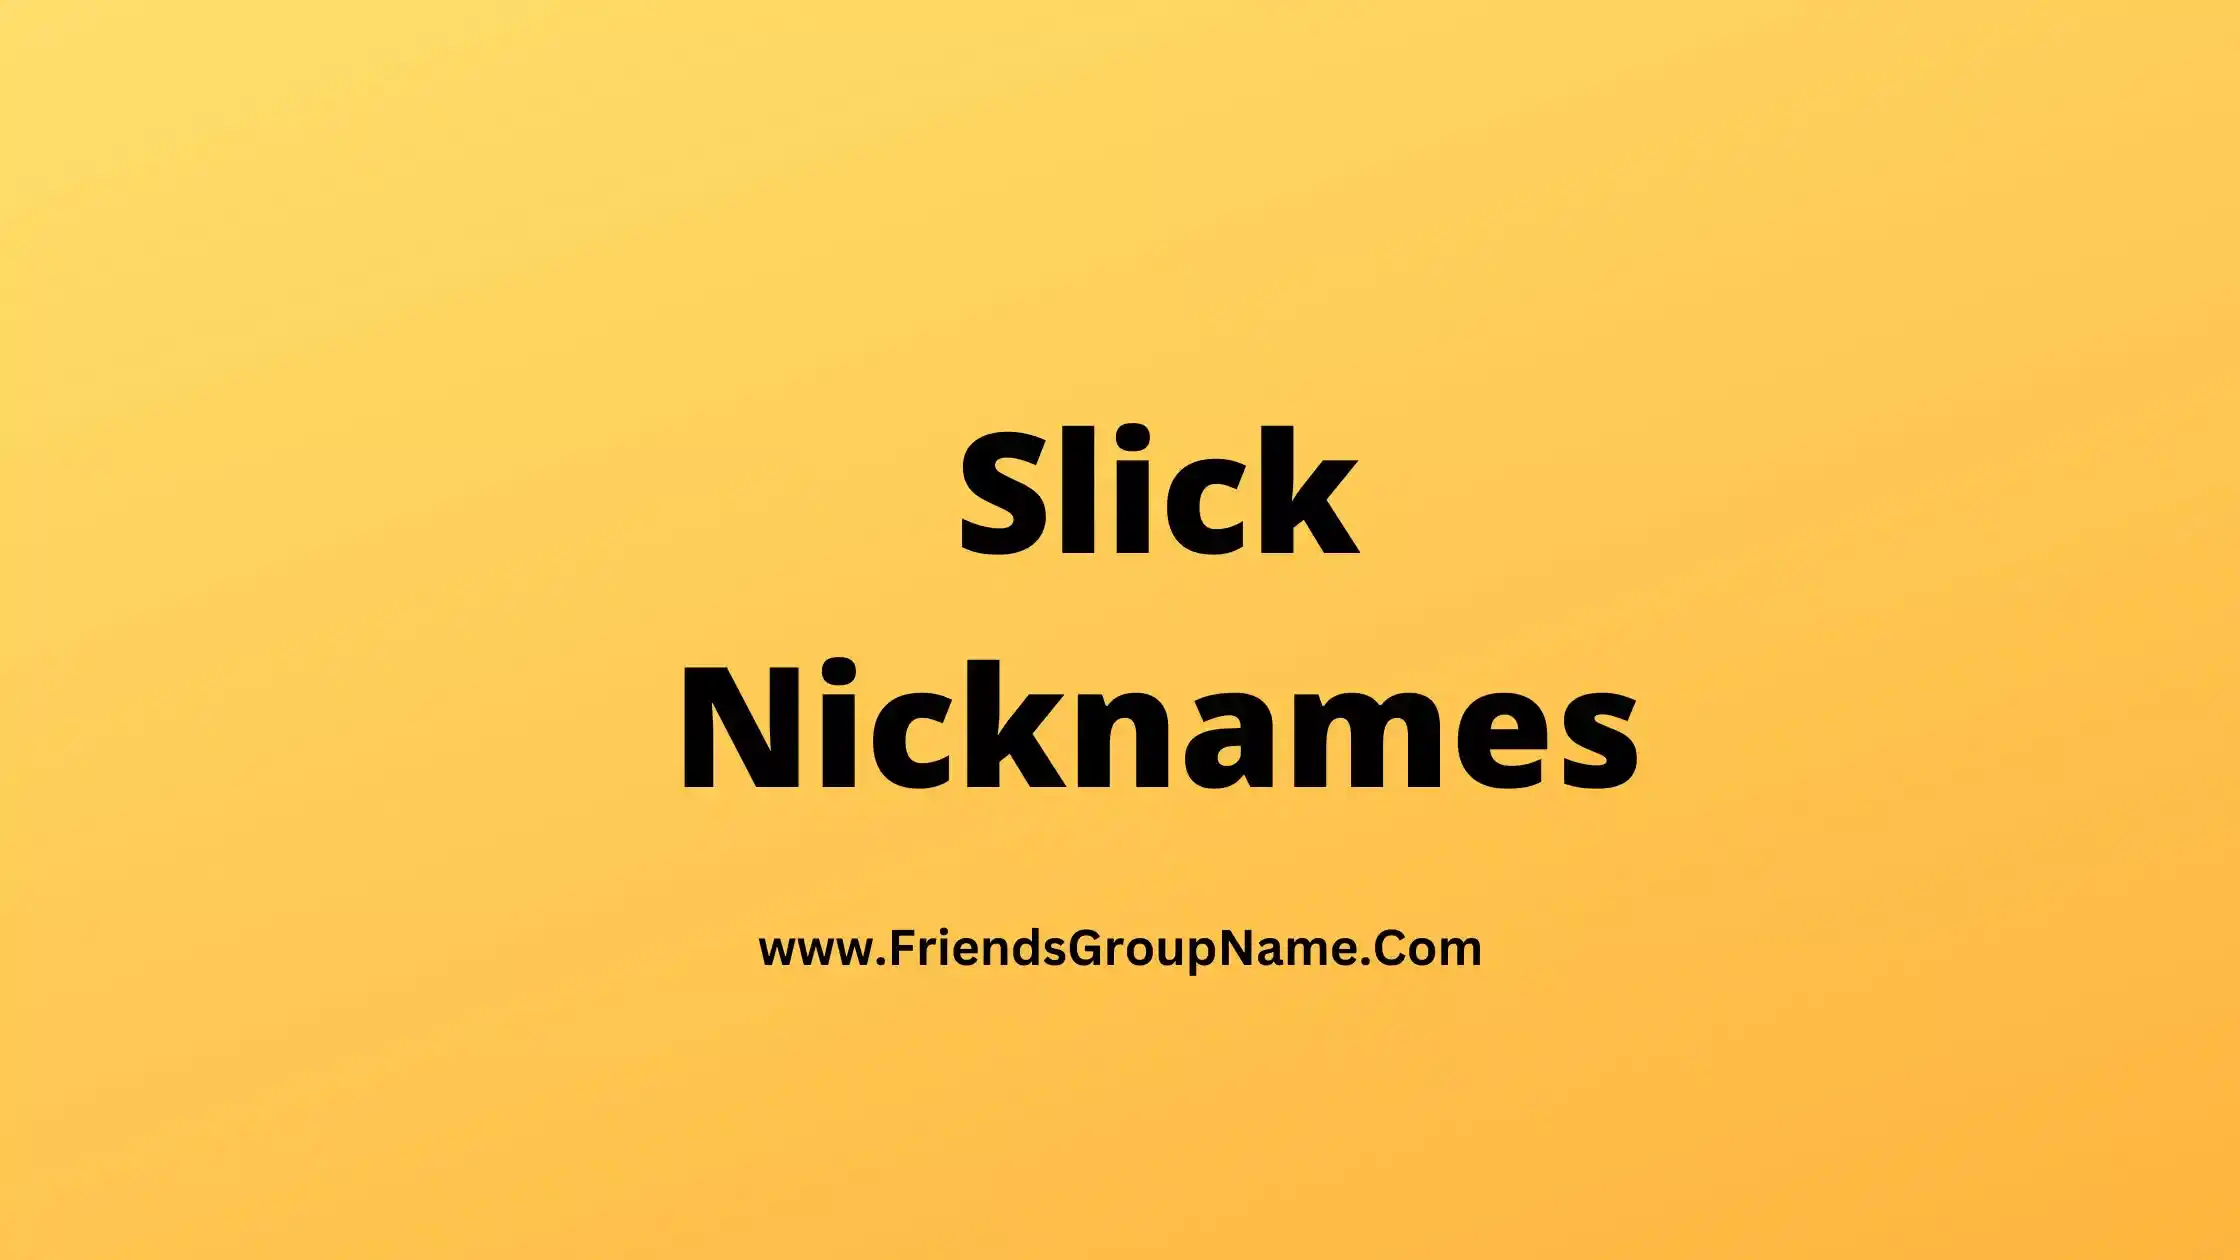 Slick Nicknames